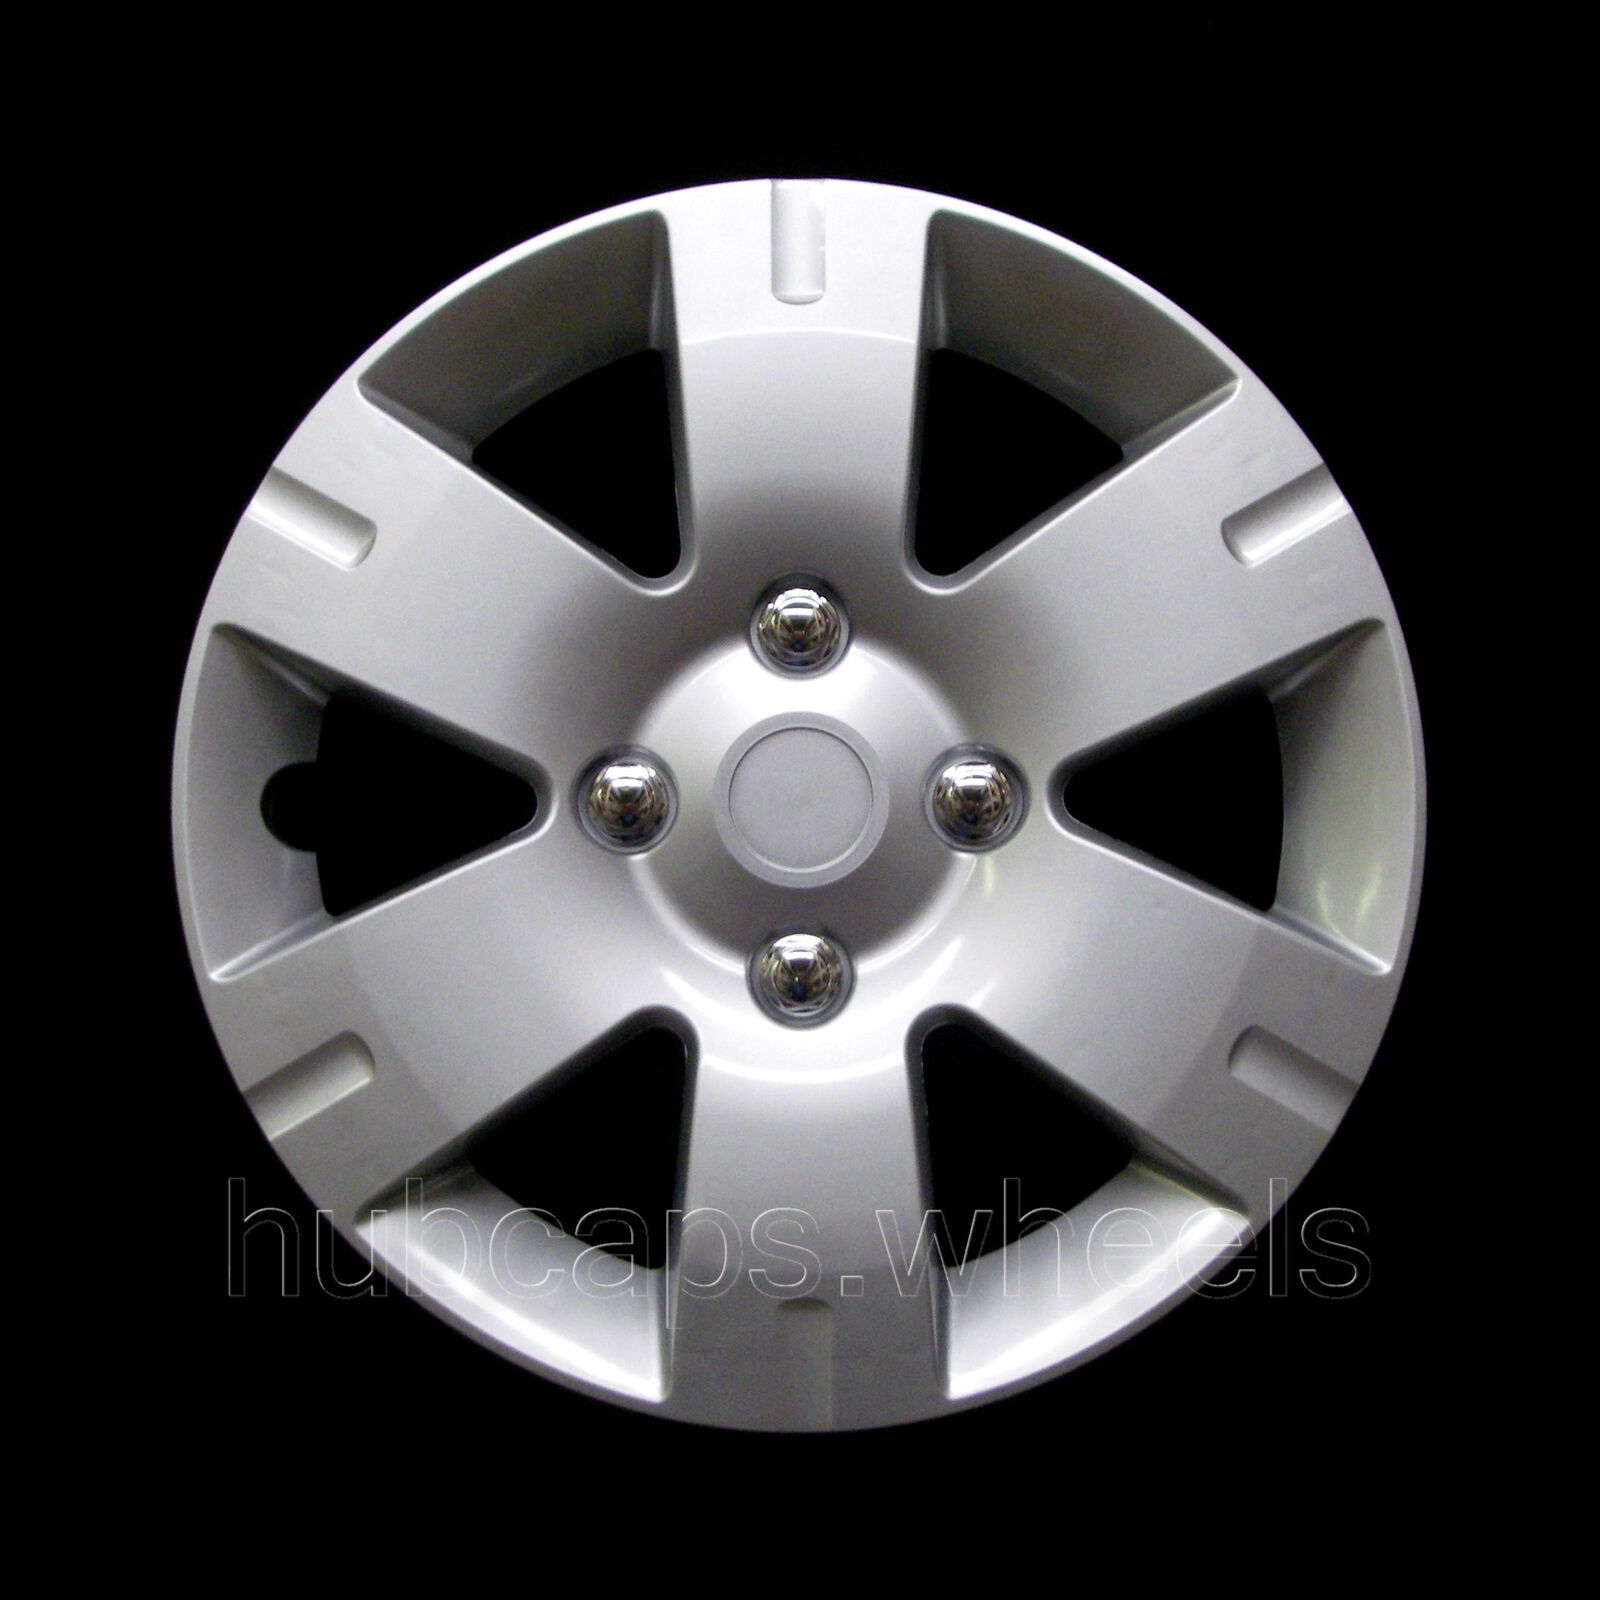 NEW Hubcap for Nissan Sentra 2007-2012 Premium Replica 15-inch Wheel Cover 53073